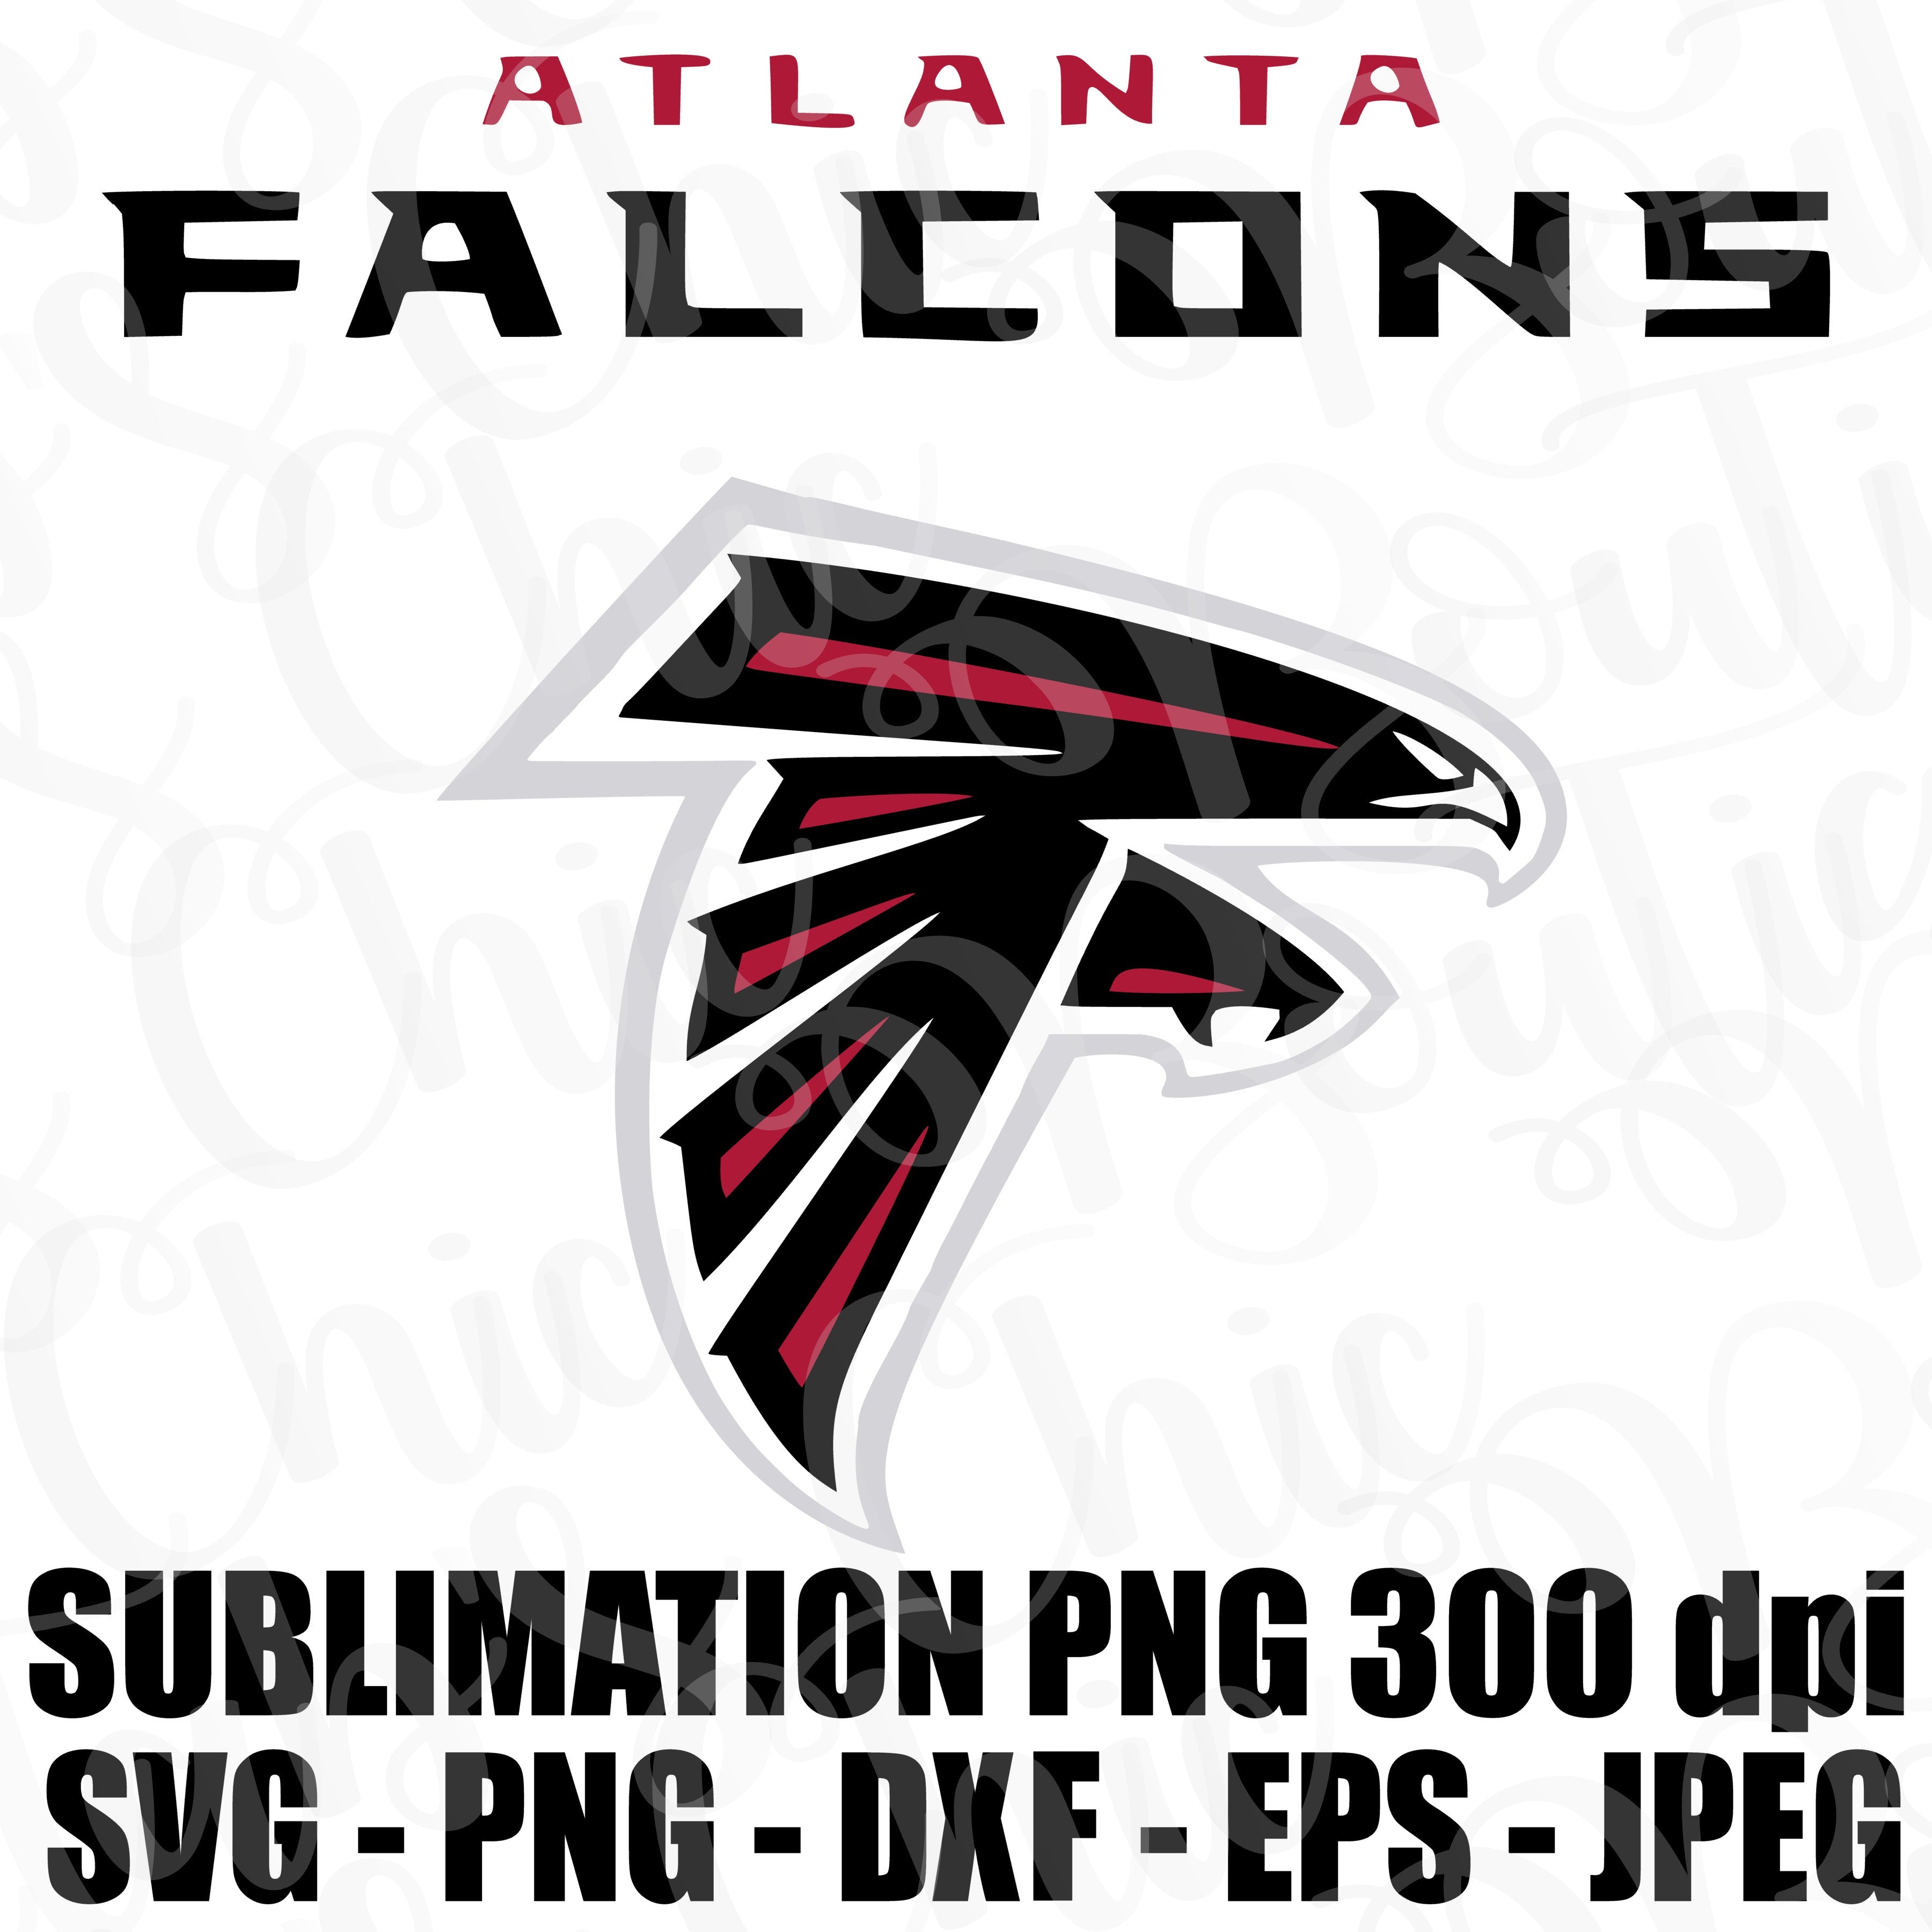 Atlanta Falcons Logo Svg Jpeg High Def 300 Dpi Png Dxf Topper Sublimat Tab S Chic Boutique